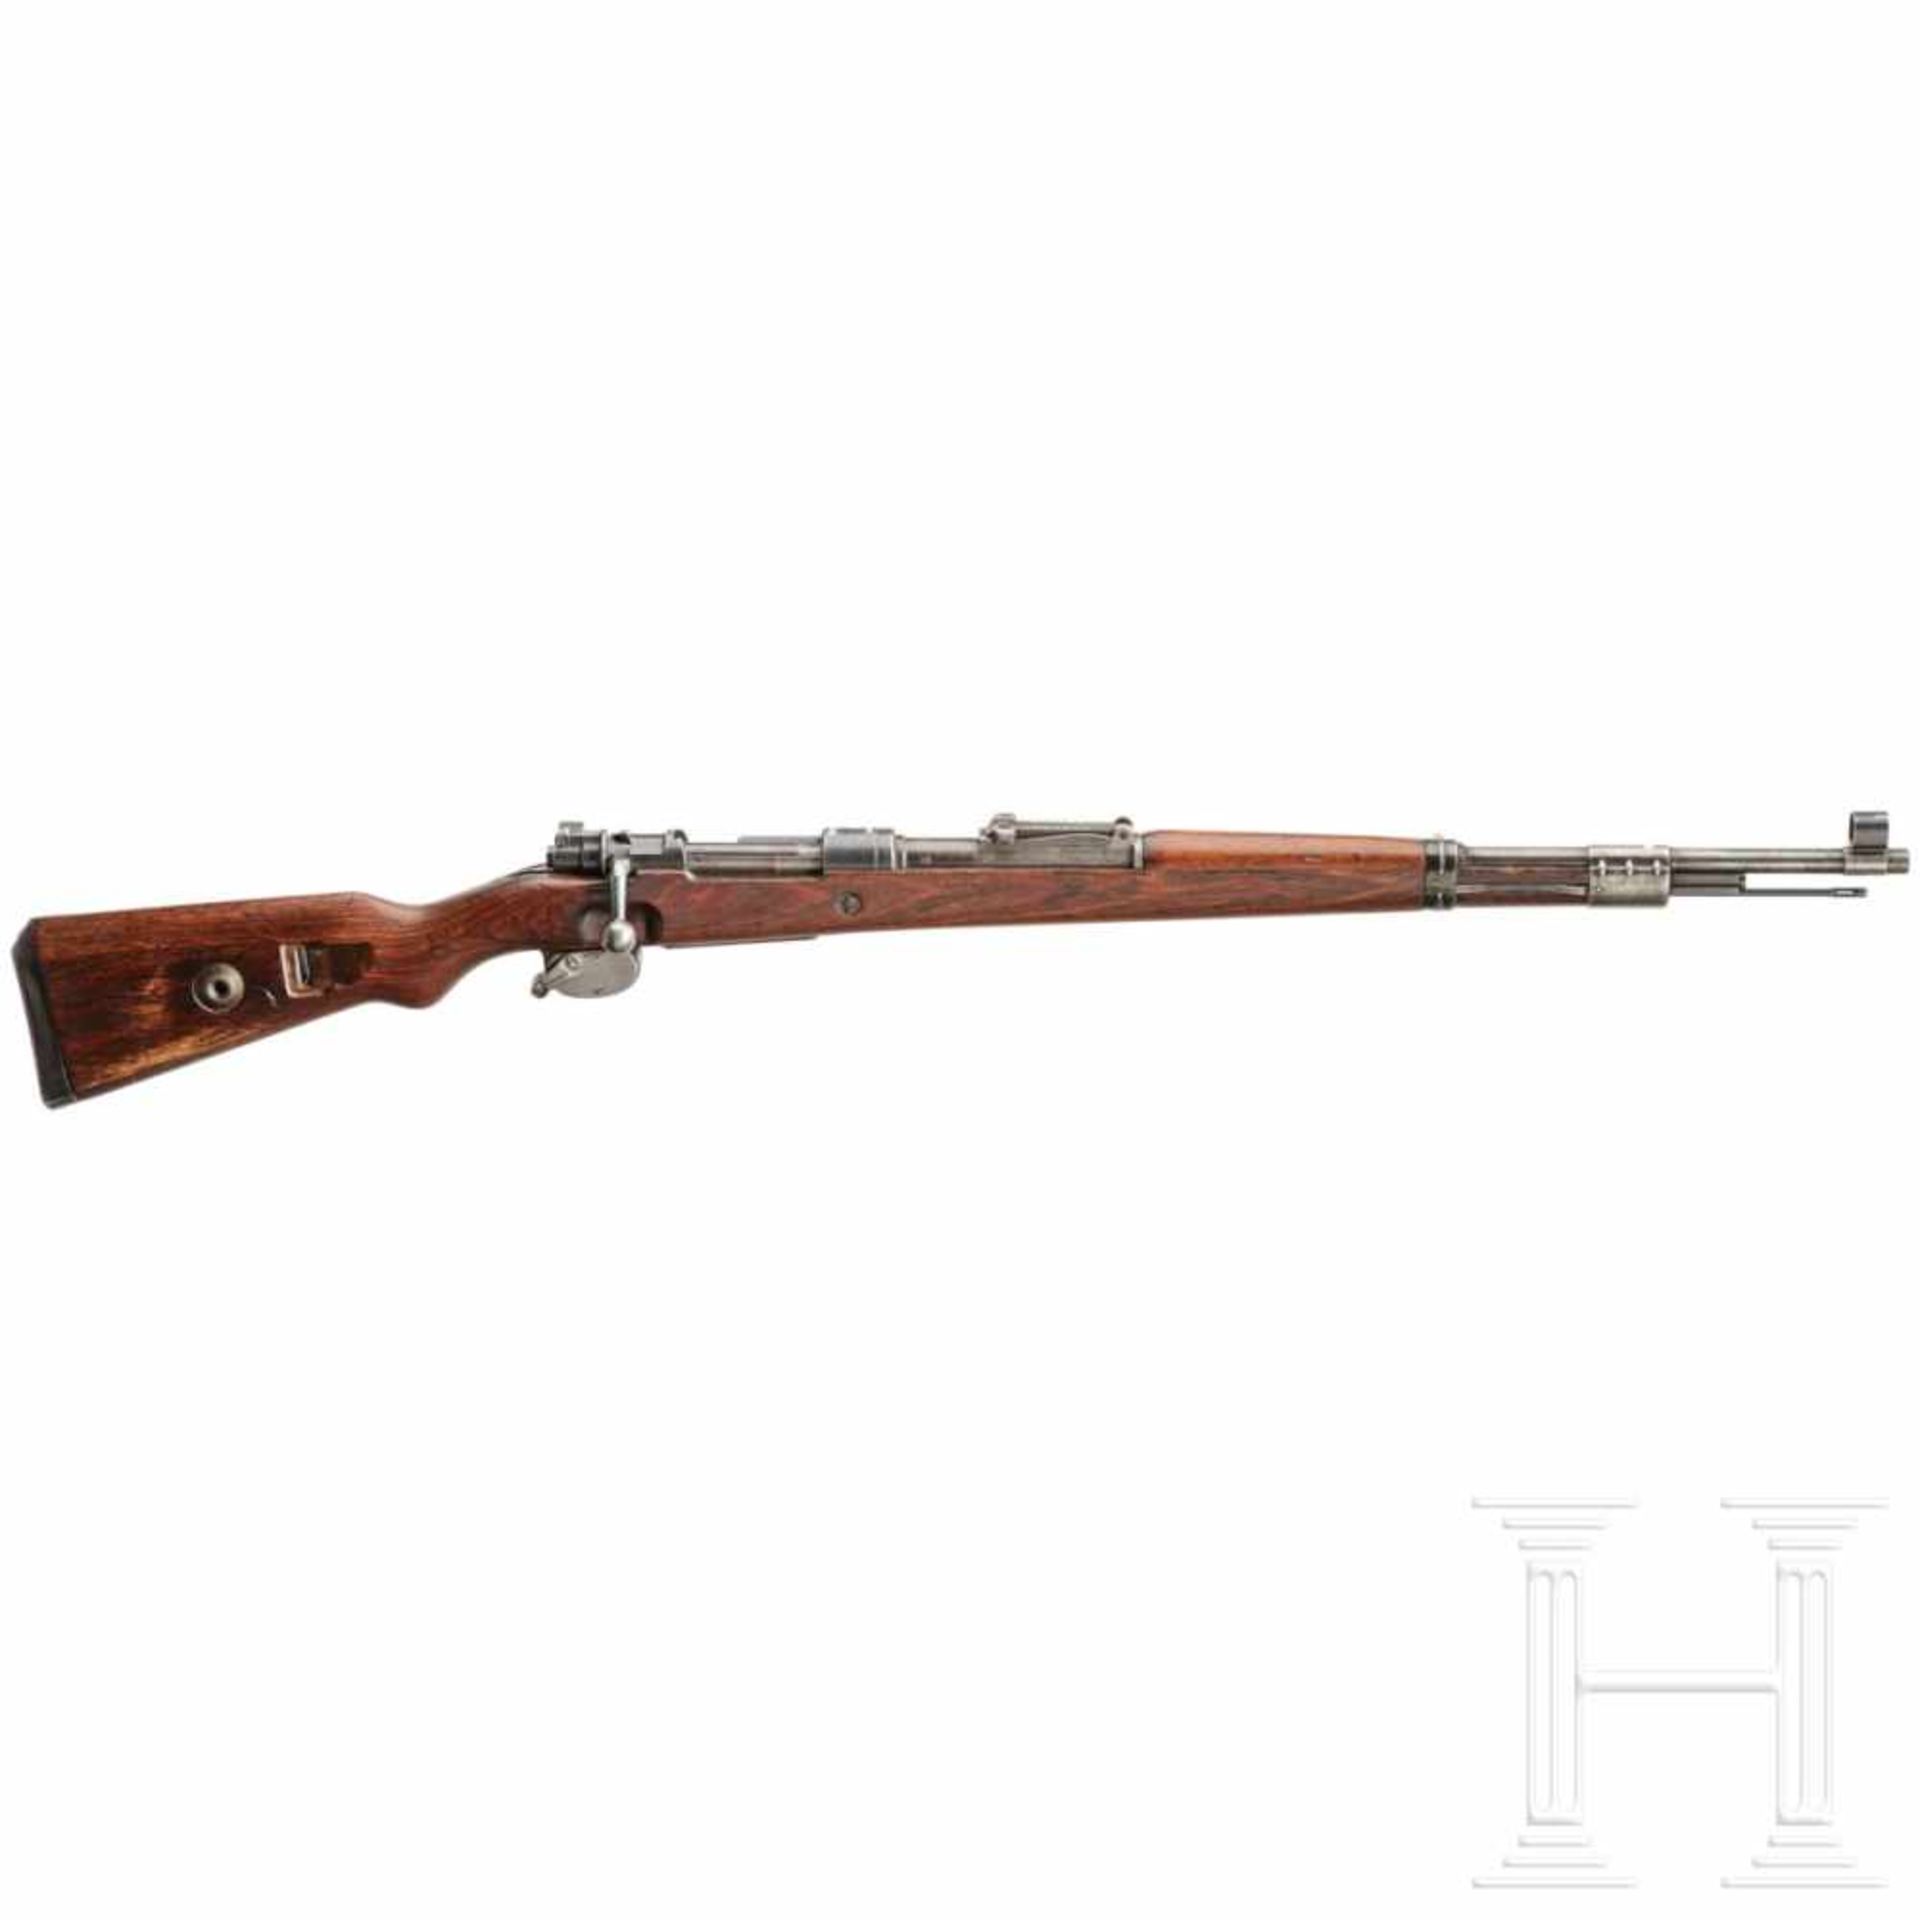 A carbine 98 k, code "dot - 1943"Kal. 8x57 IS, Nr. 5958m, nummerngleich. Fast blanker Lauf.